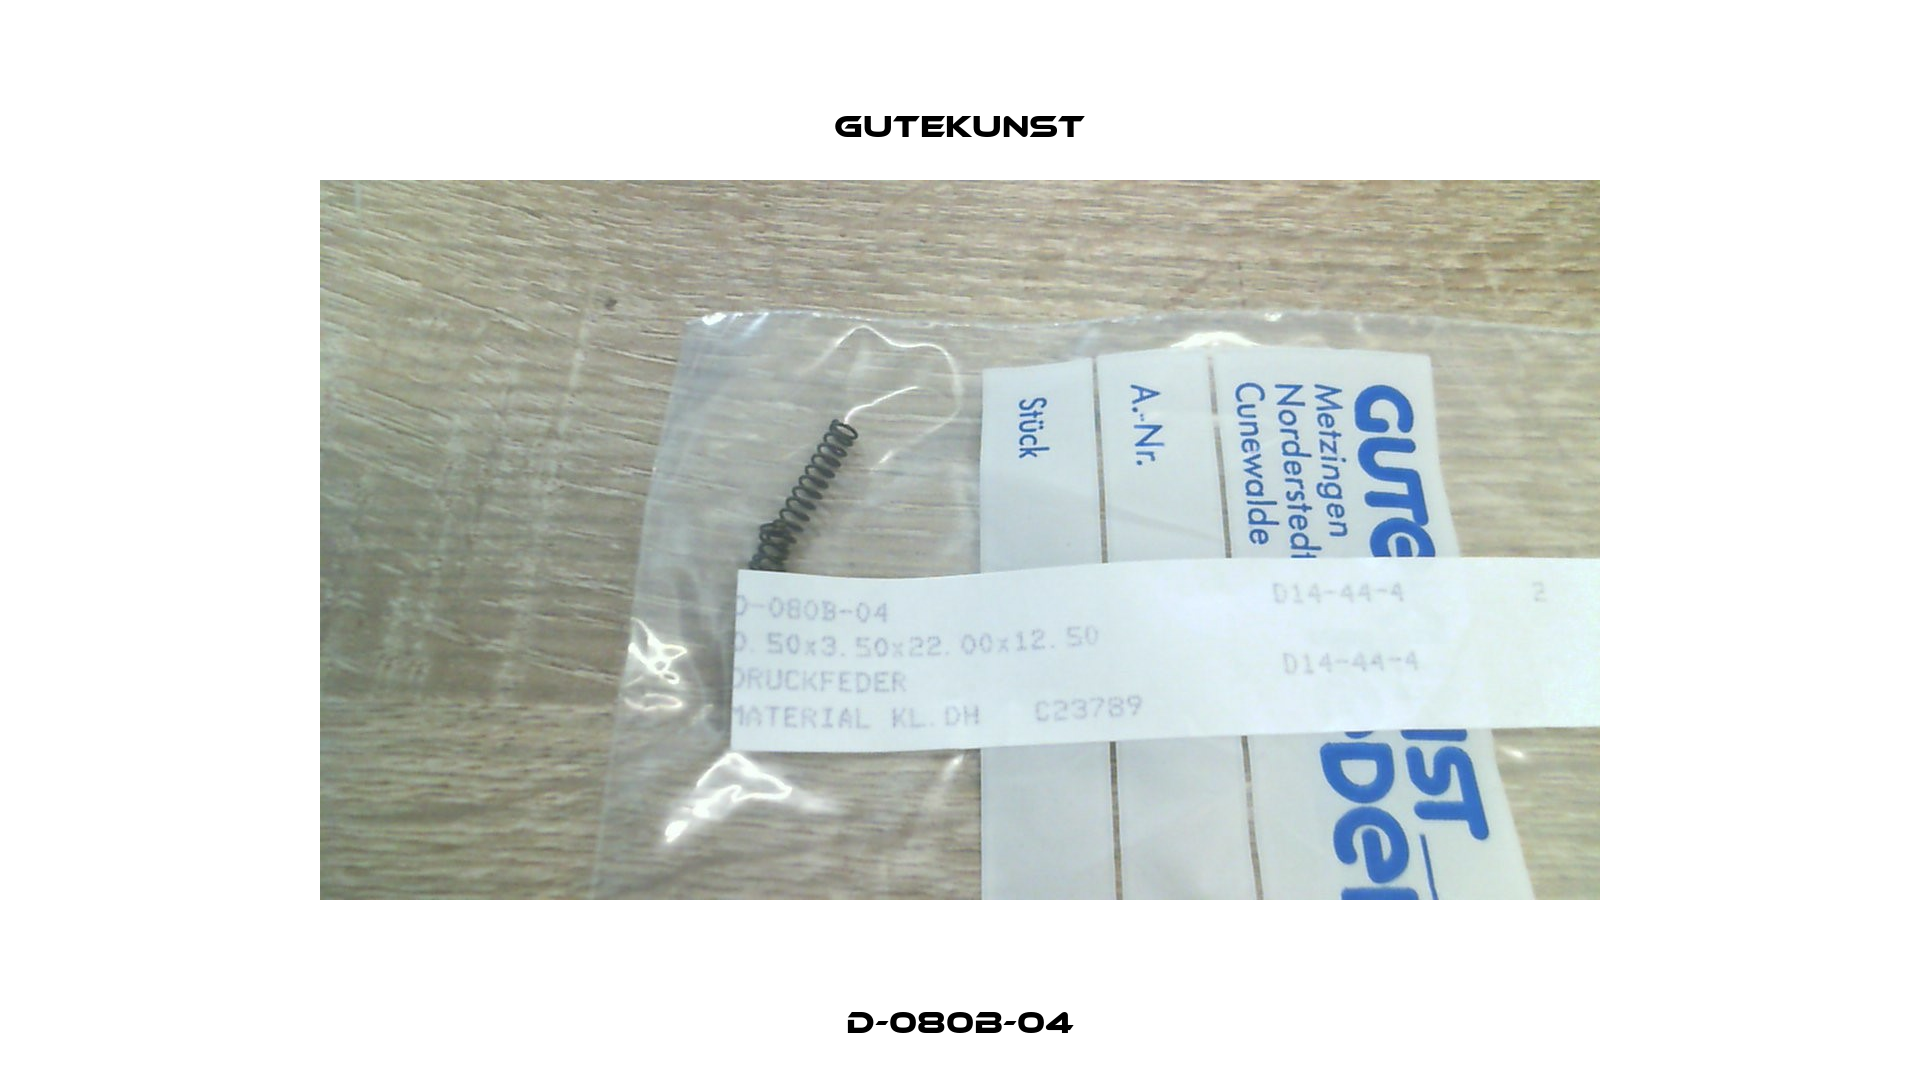 D-080B-04 Gutekunst